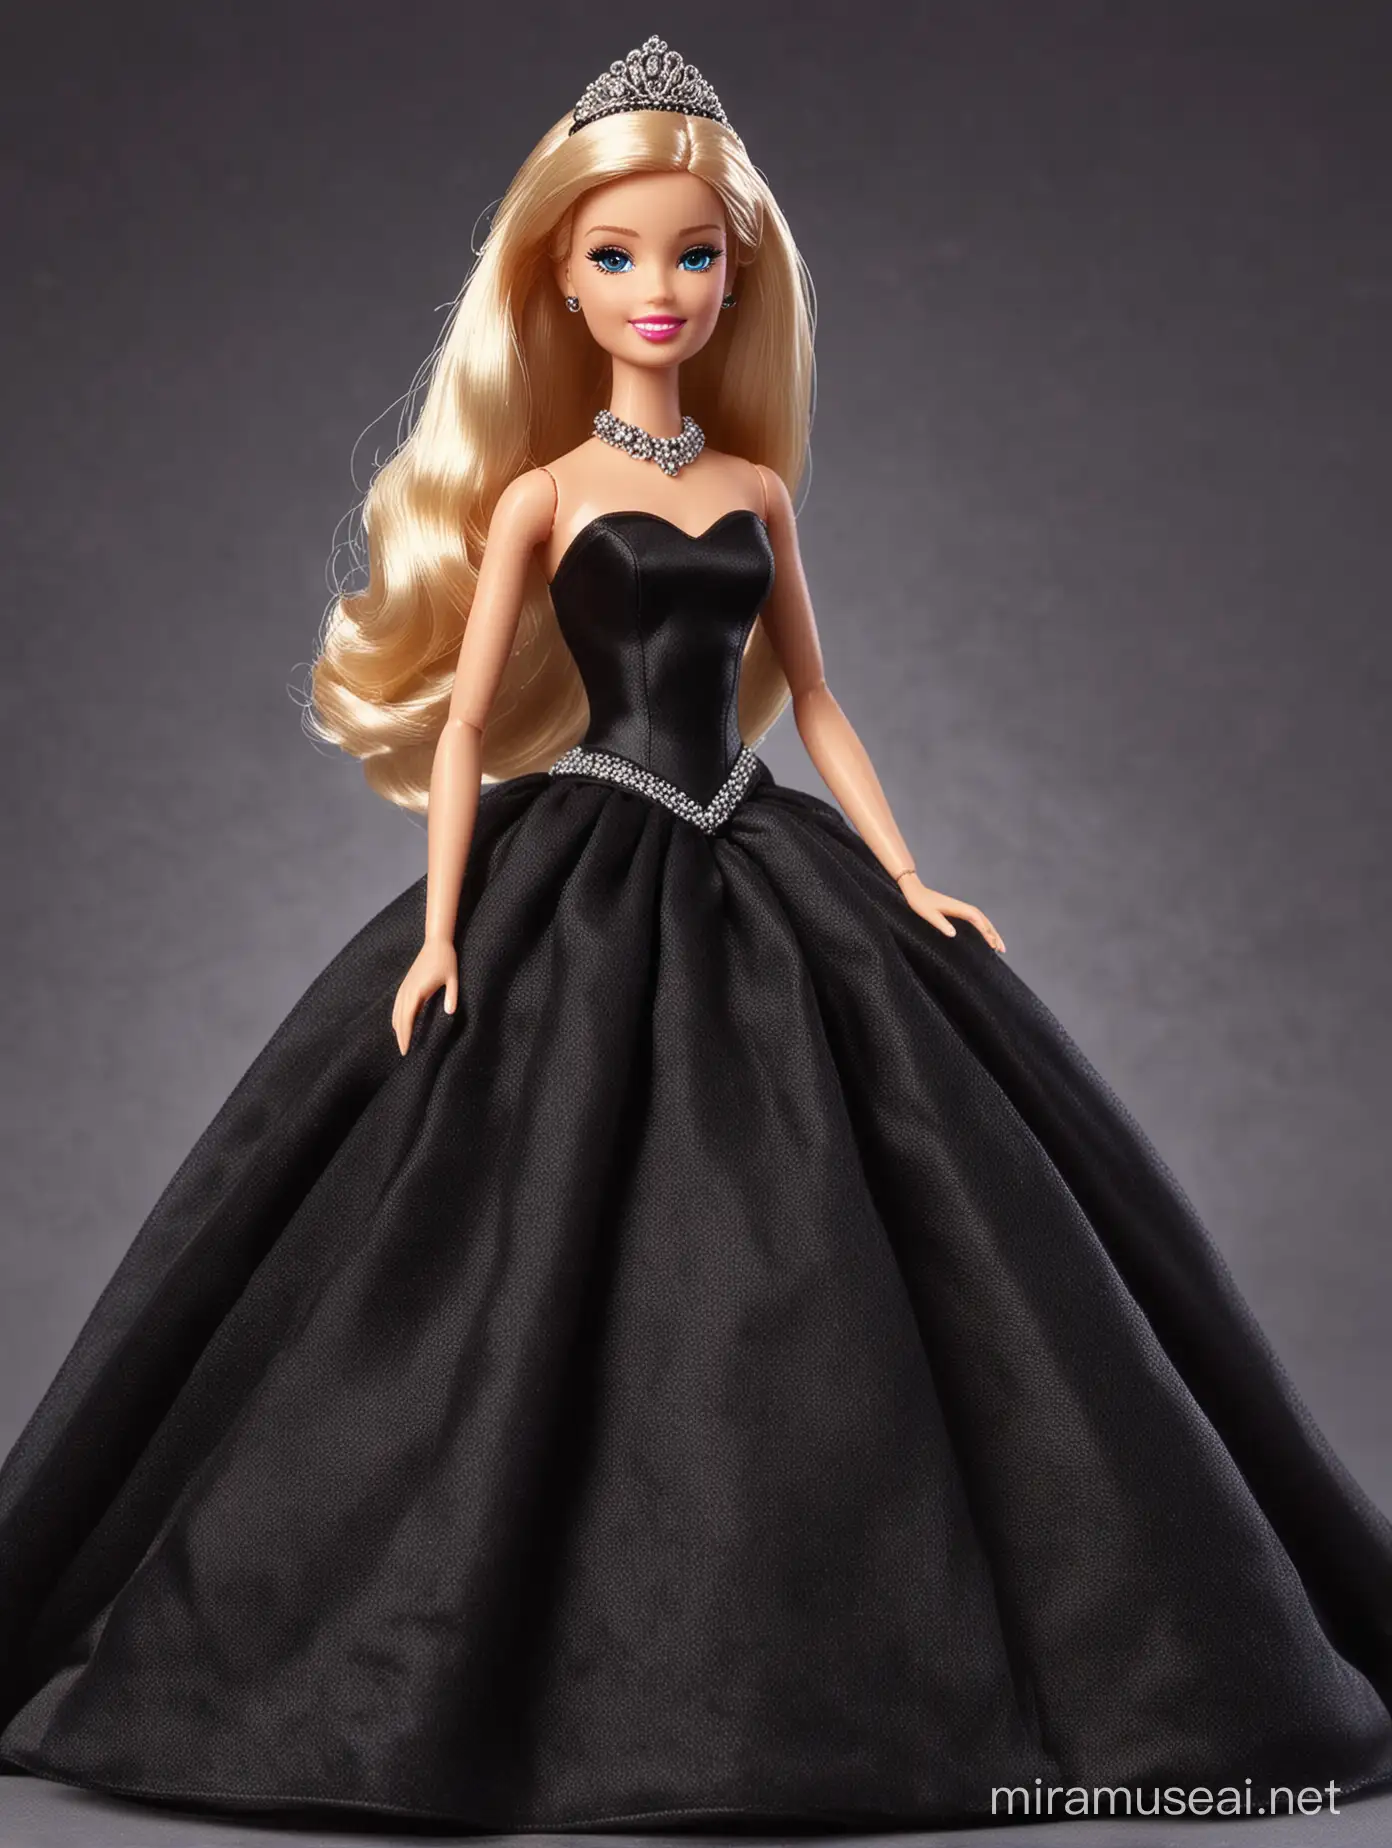 Barbie in black princess dress